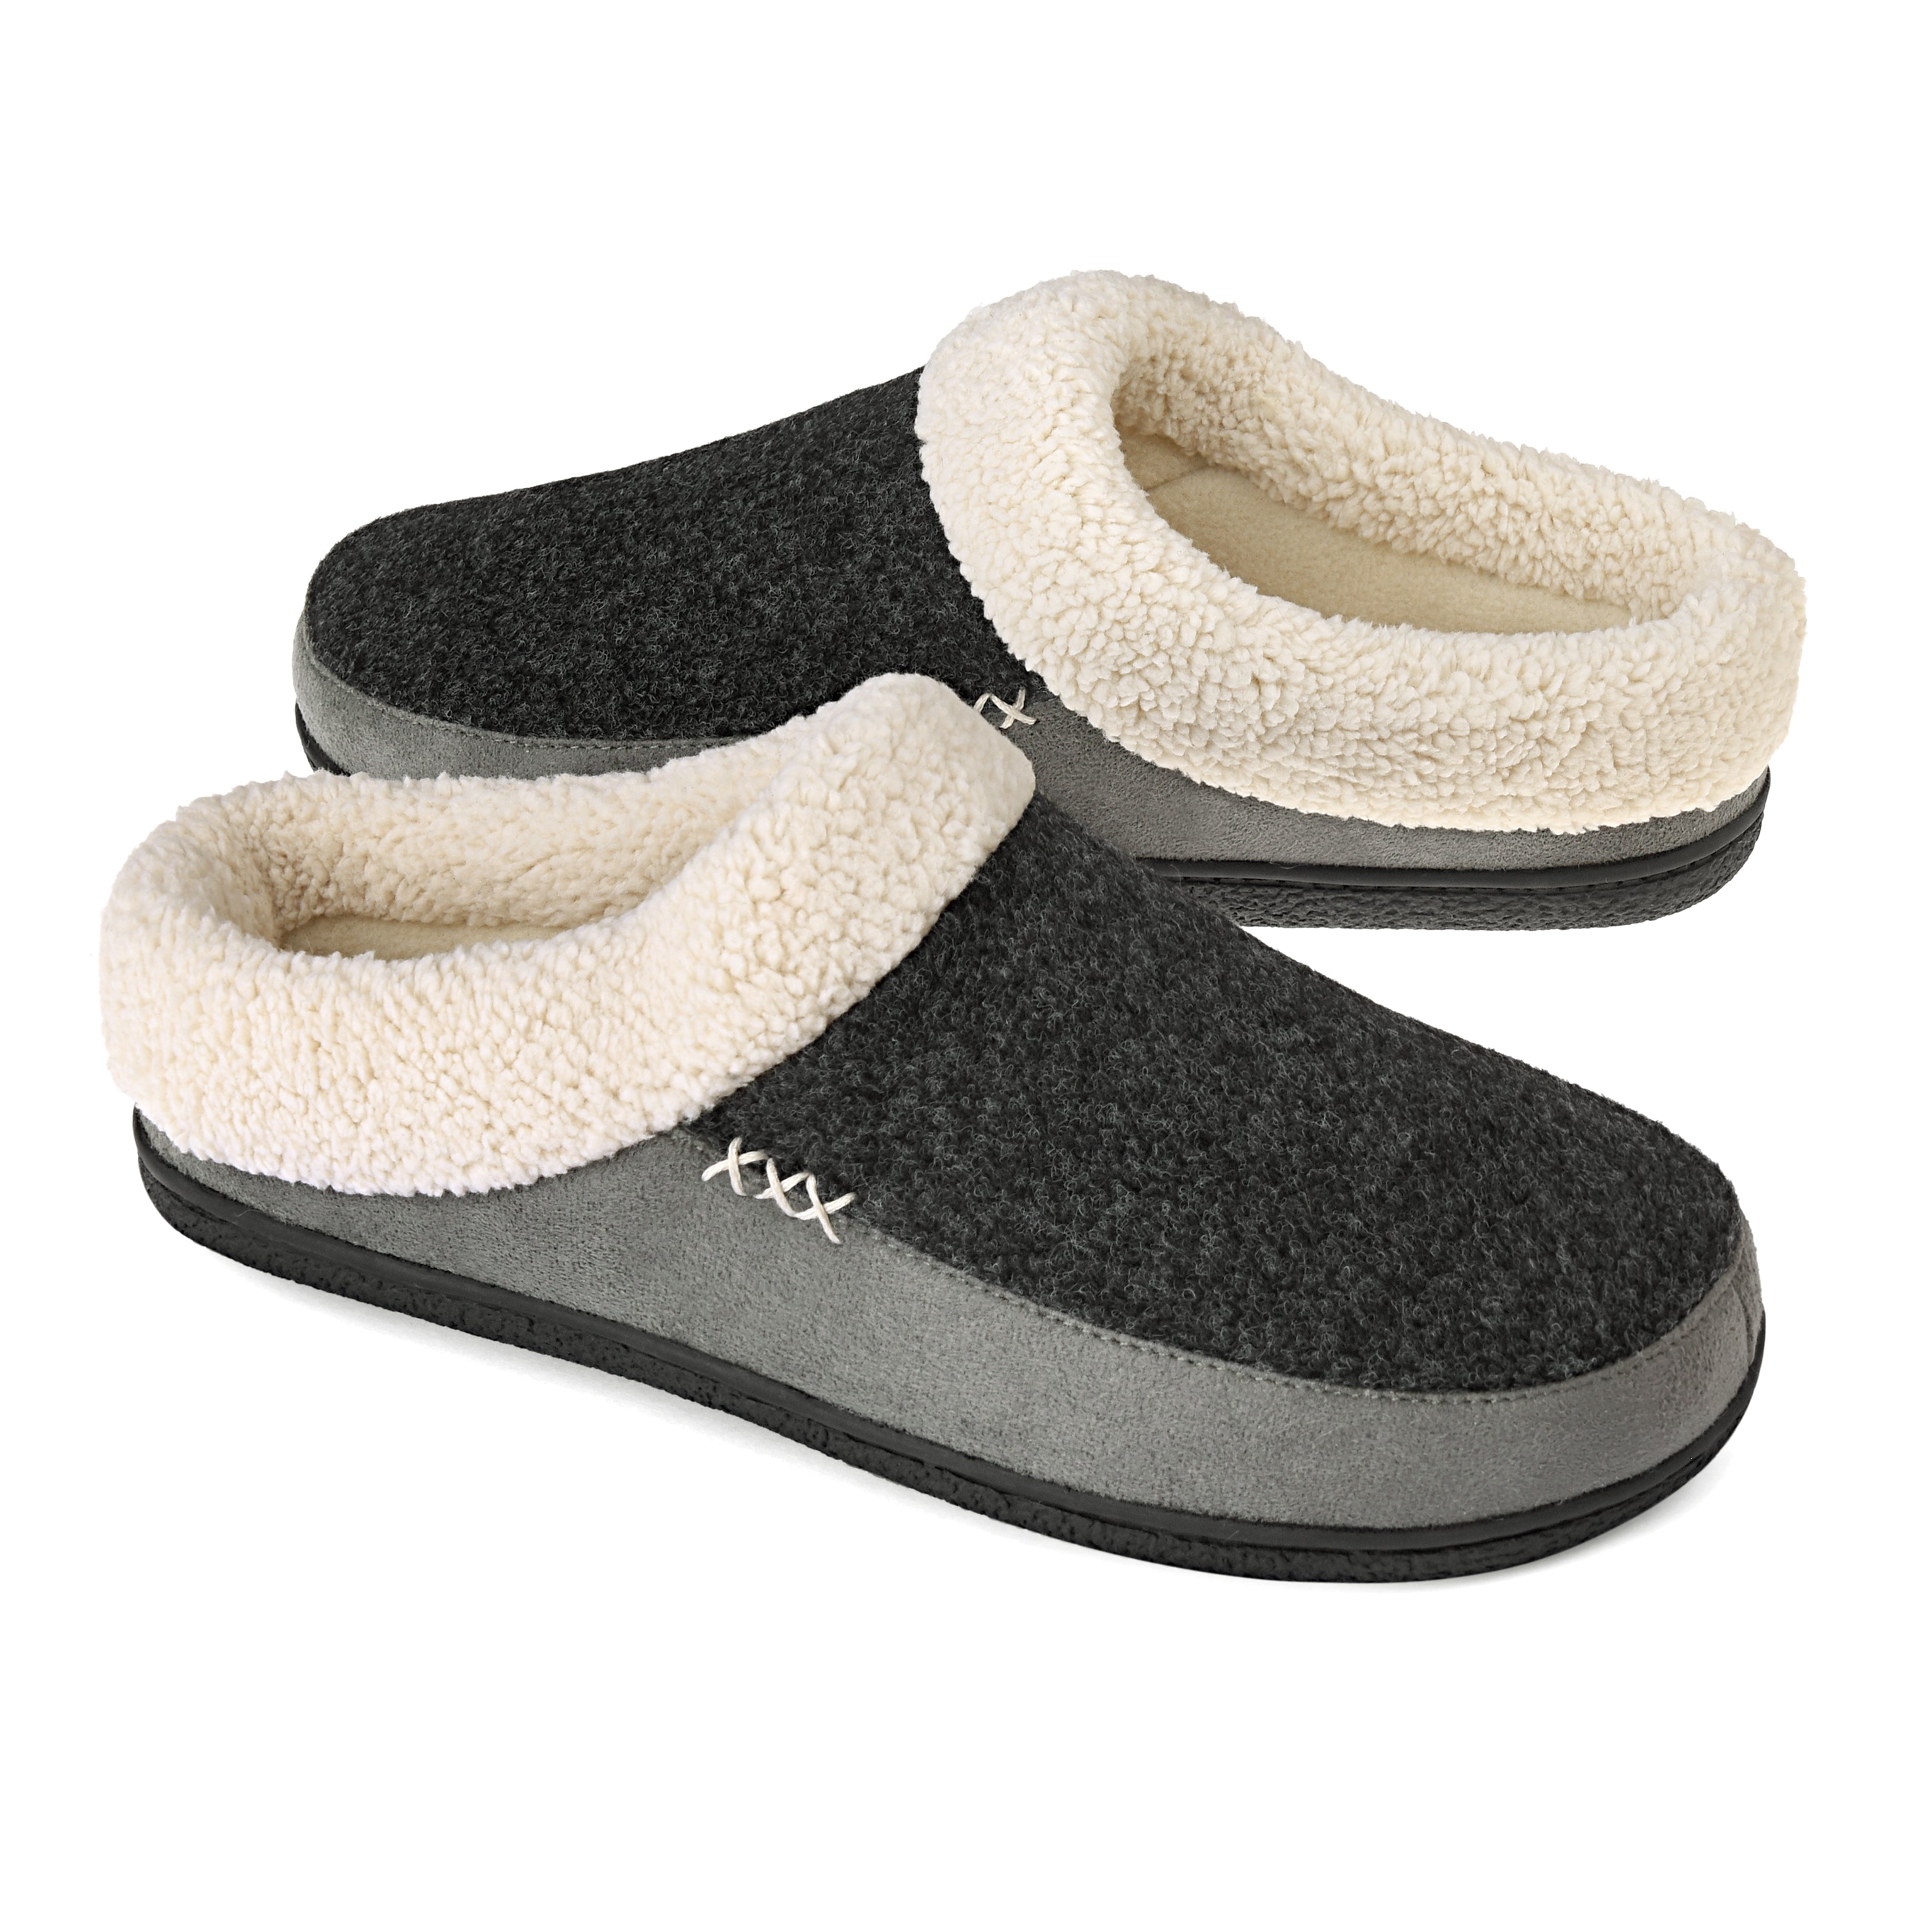 VONMAY Men's Slippers Fuzzy House Shoes Memory Foam Slip On Clog Plush